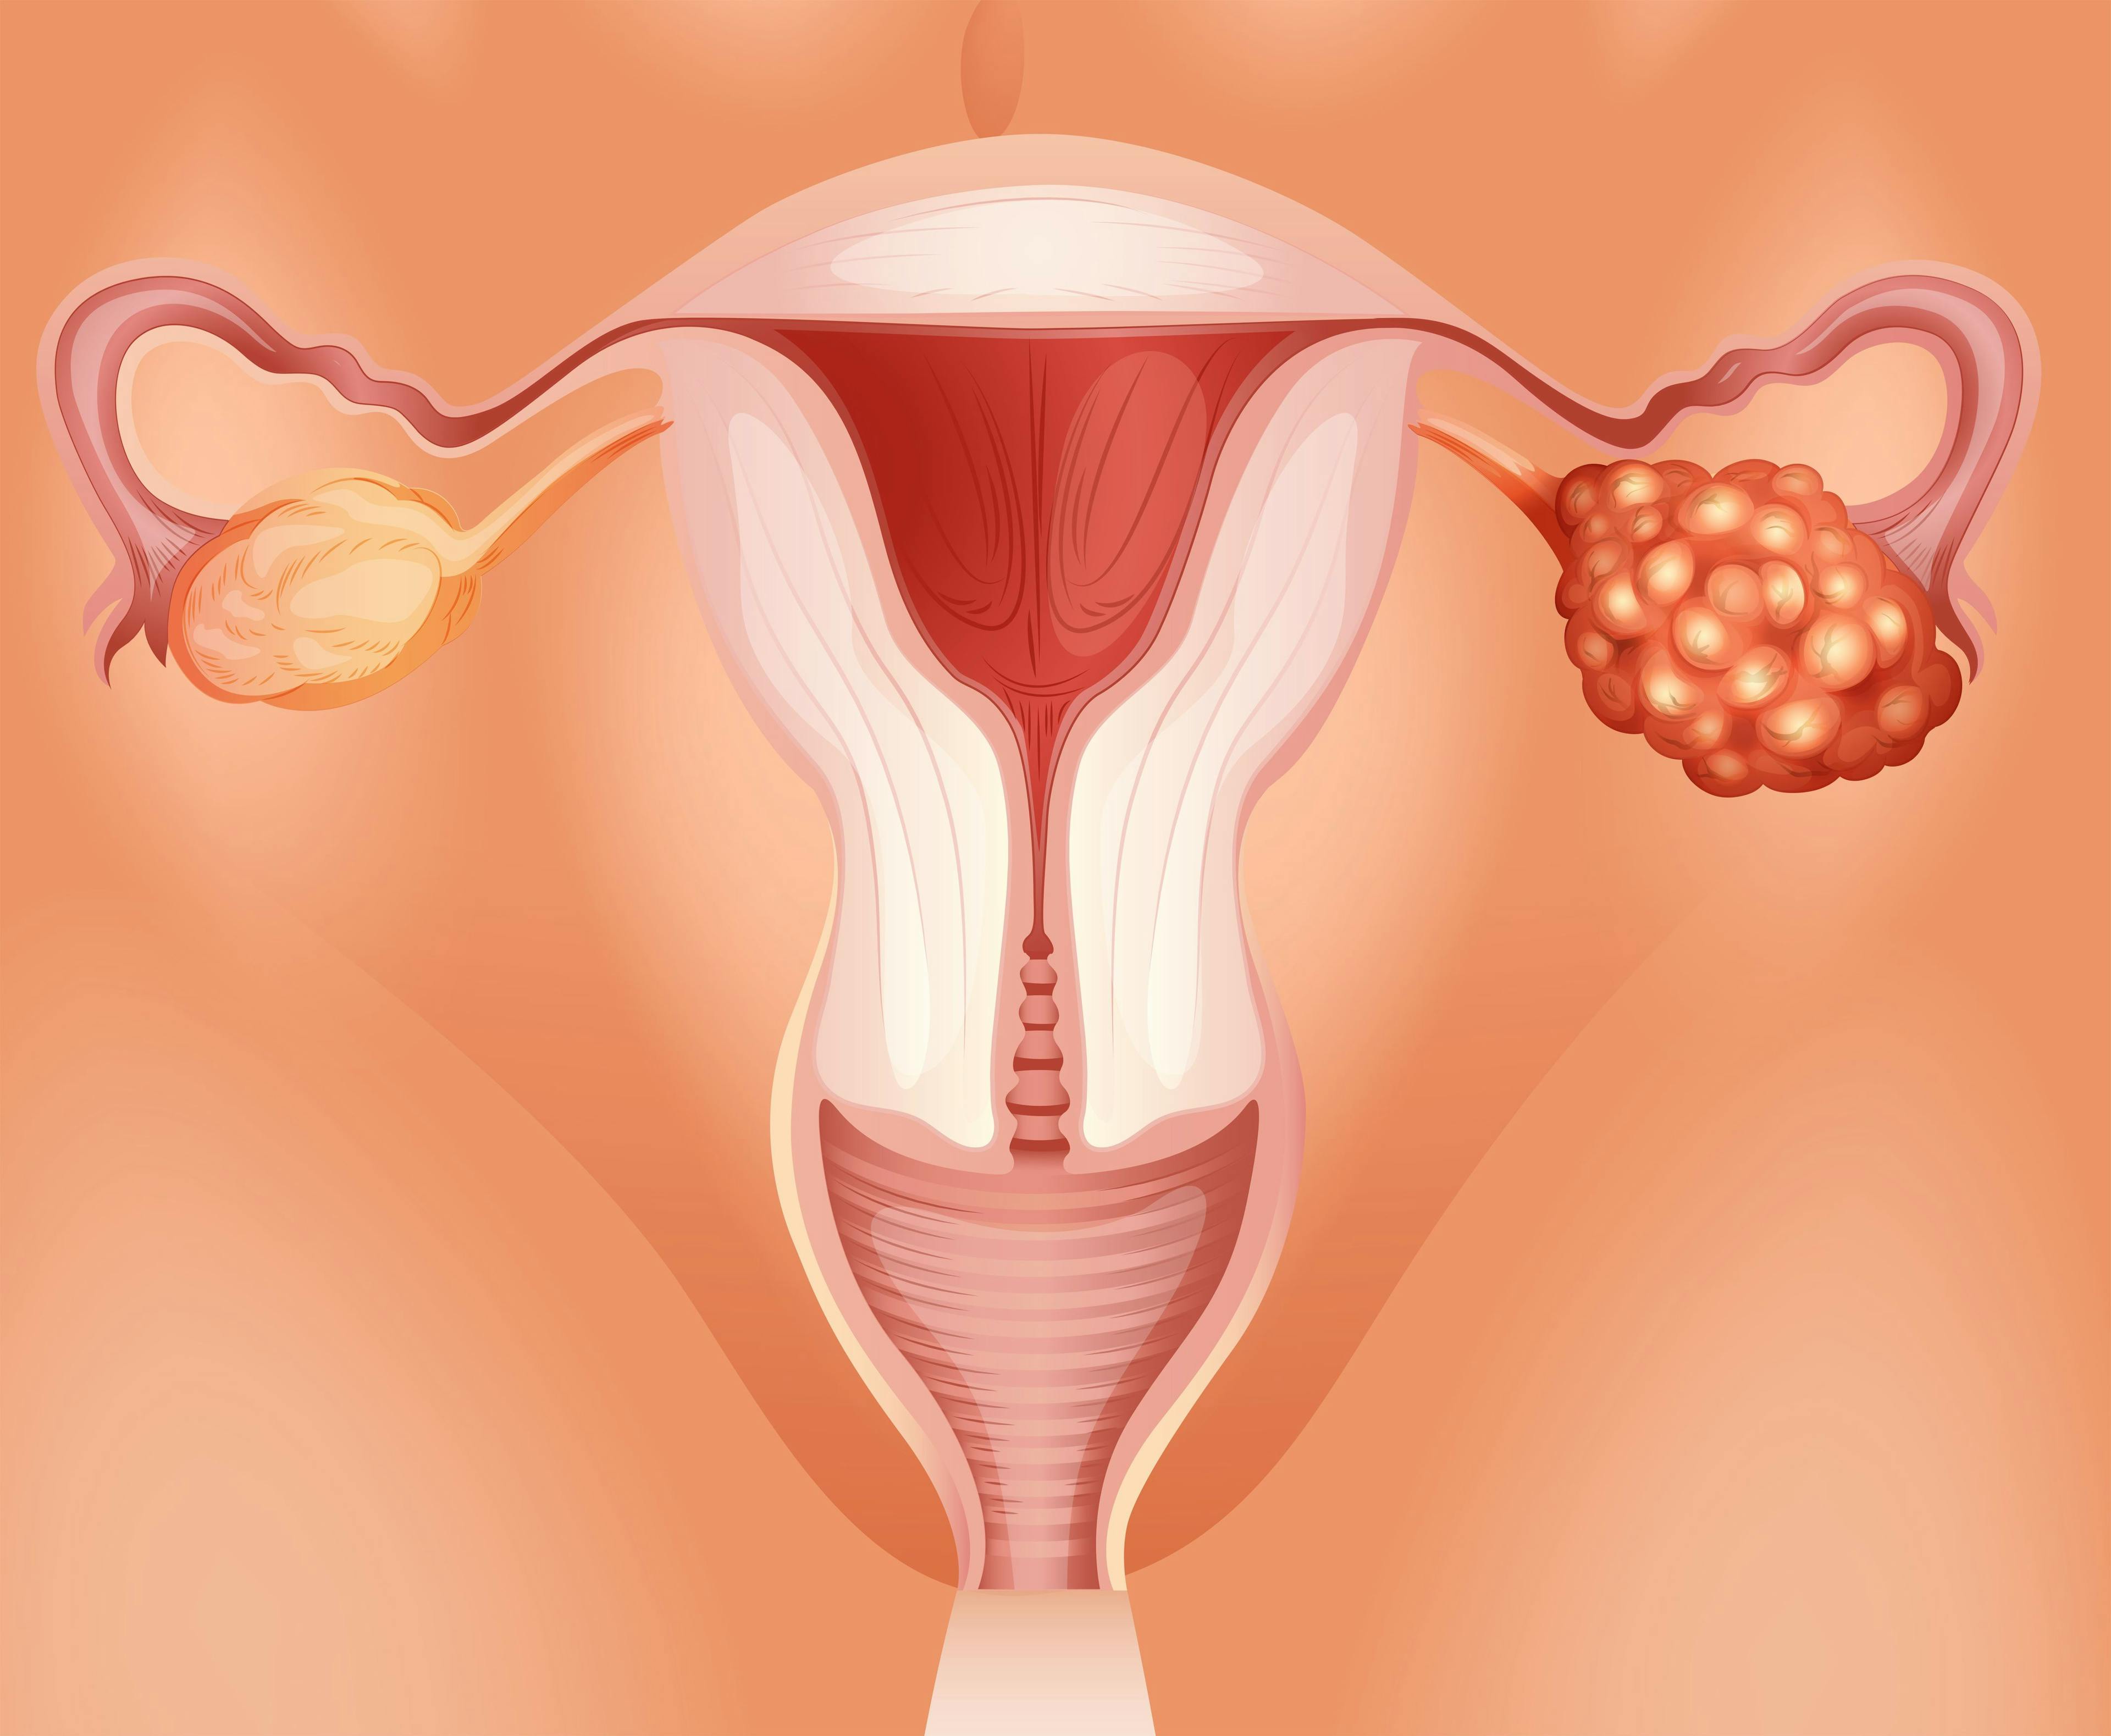 Ovarian cancer in woman: ©blueringmedia - stock.adobe.com